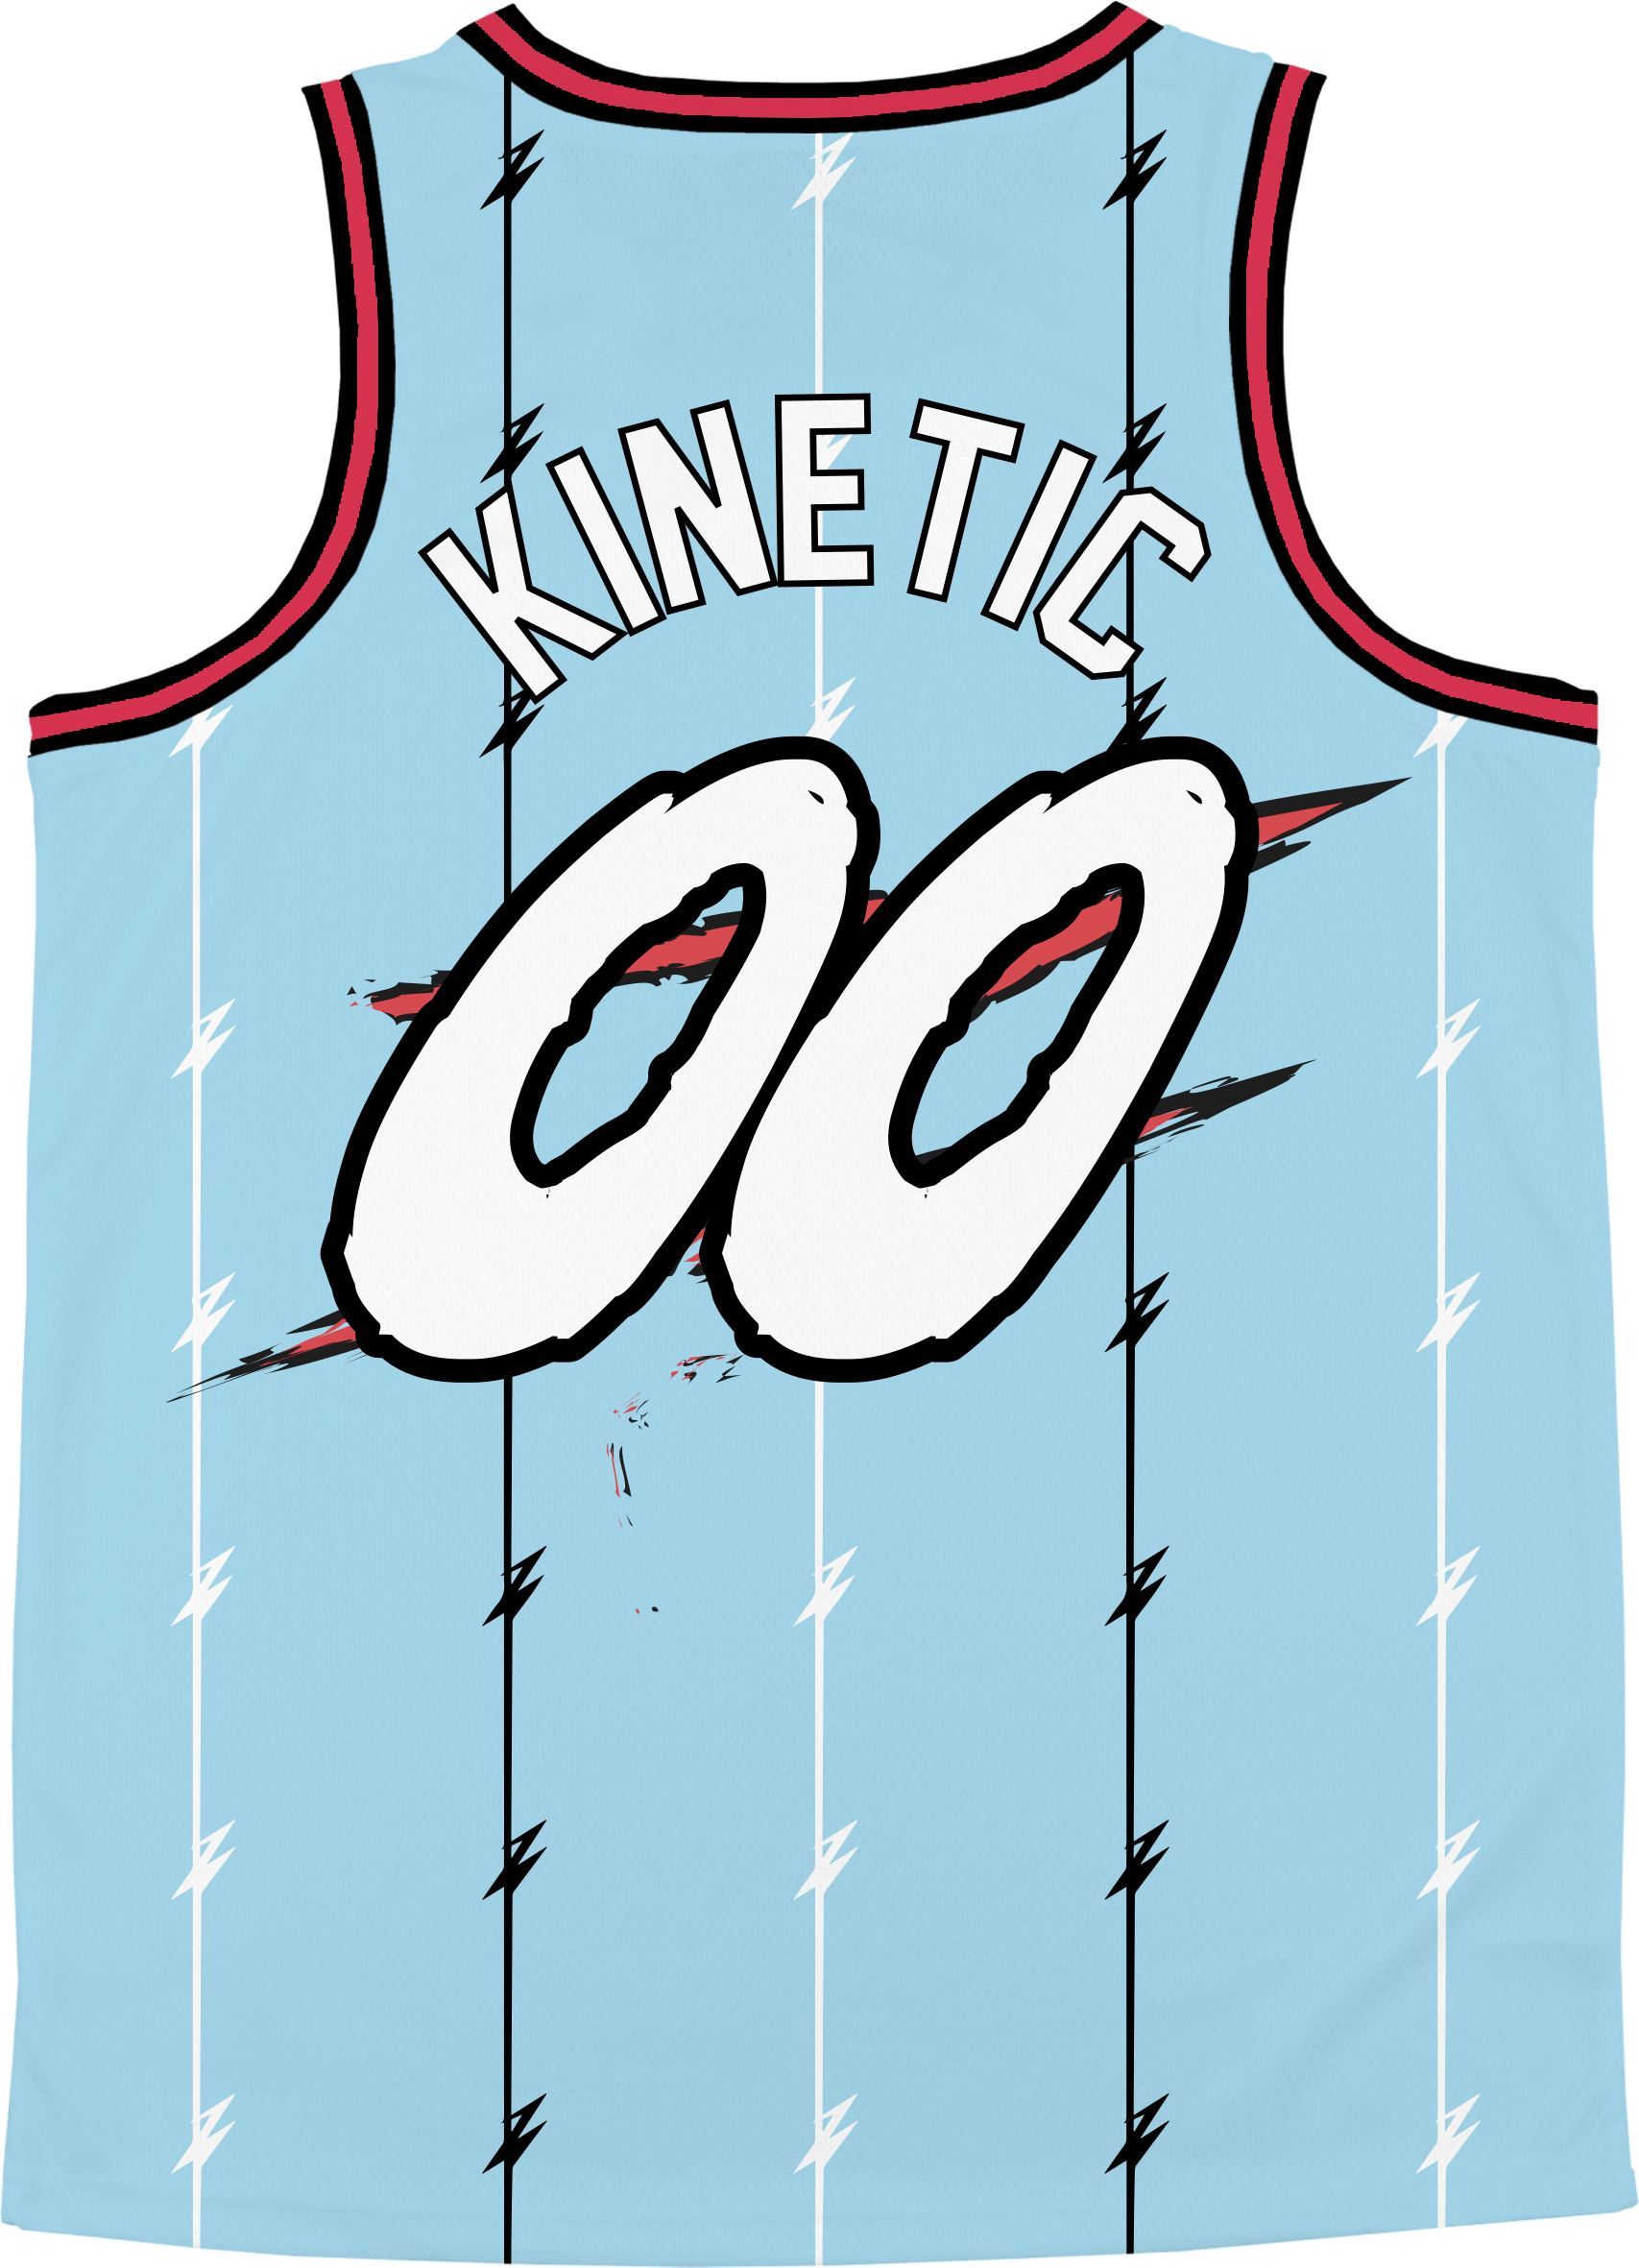 Sigma Chi - Atlantis Basketball Jersey - Kinetic Society